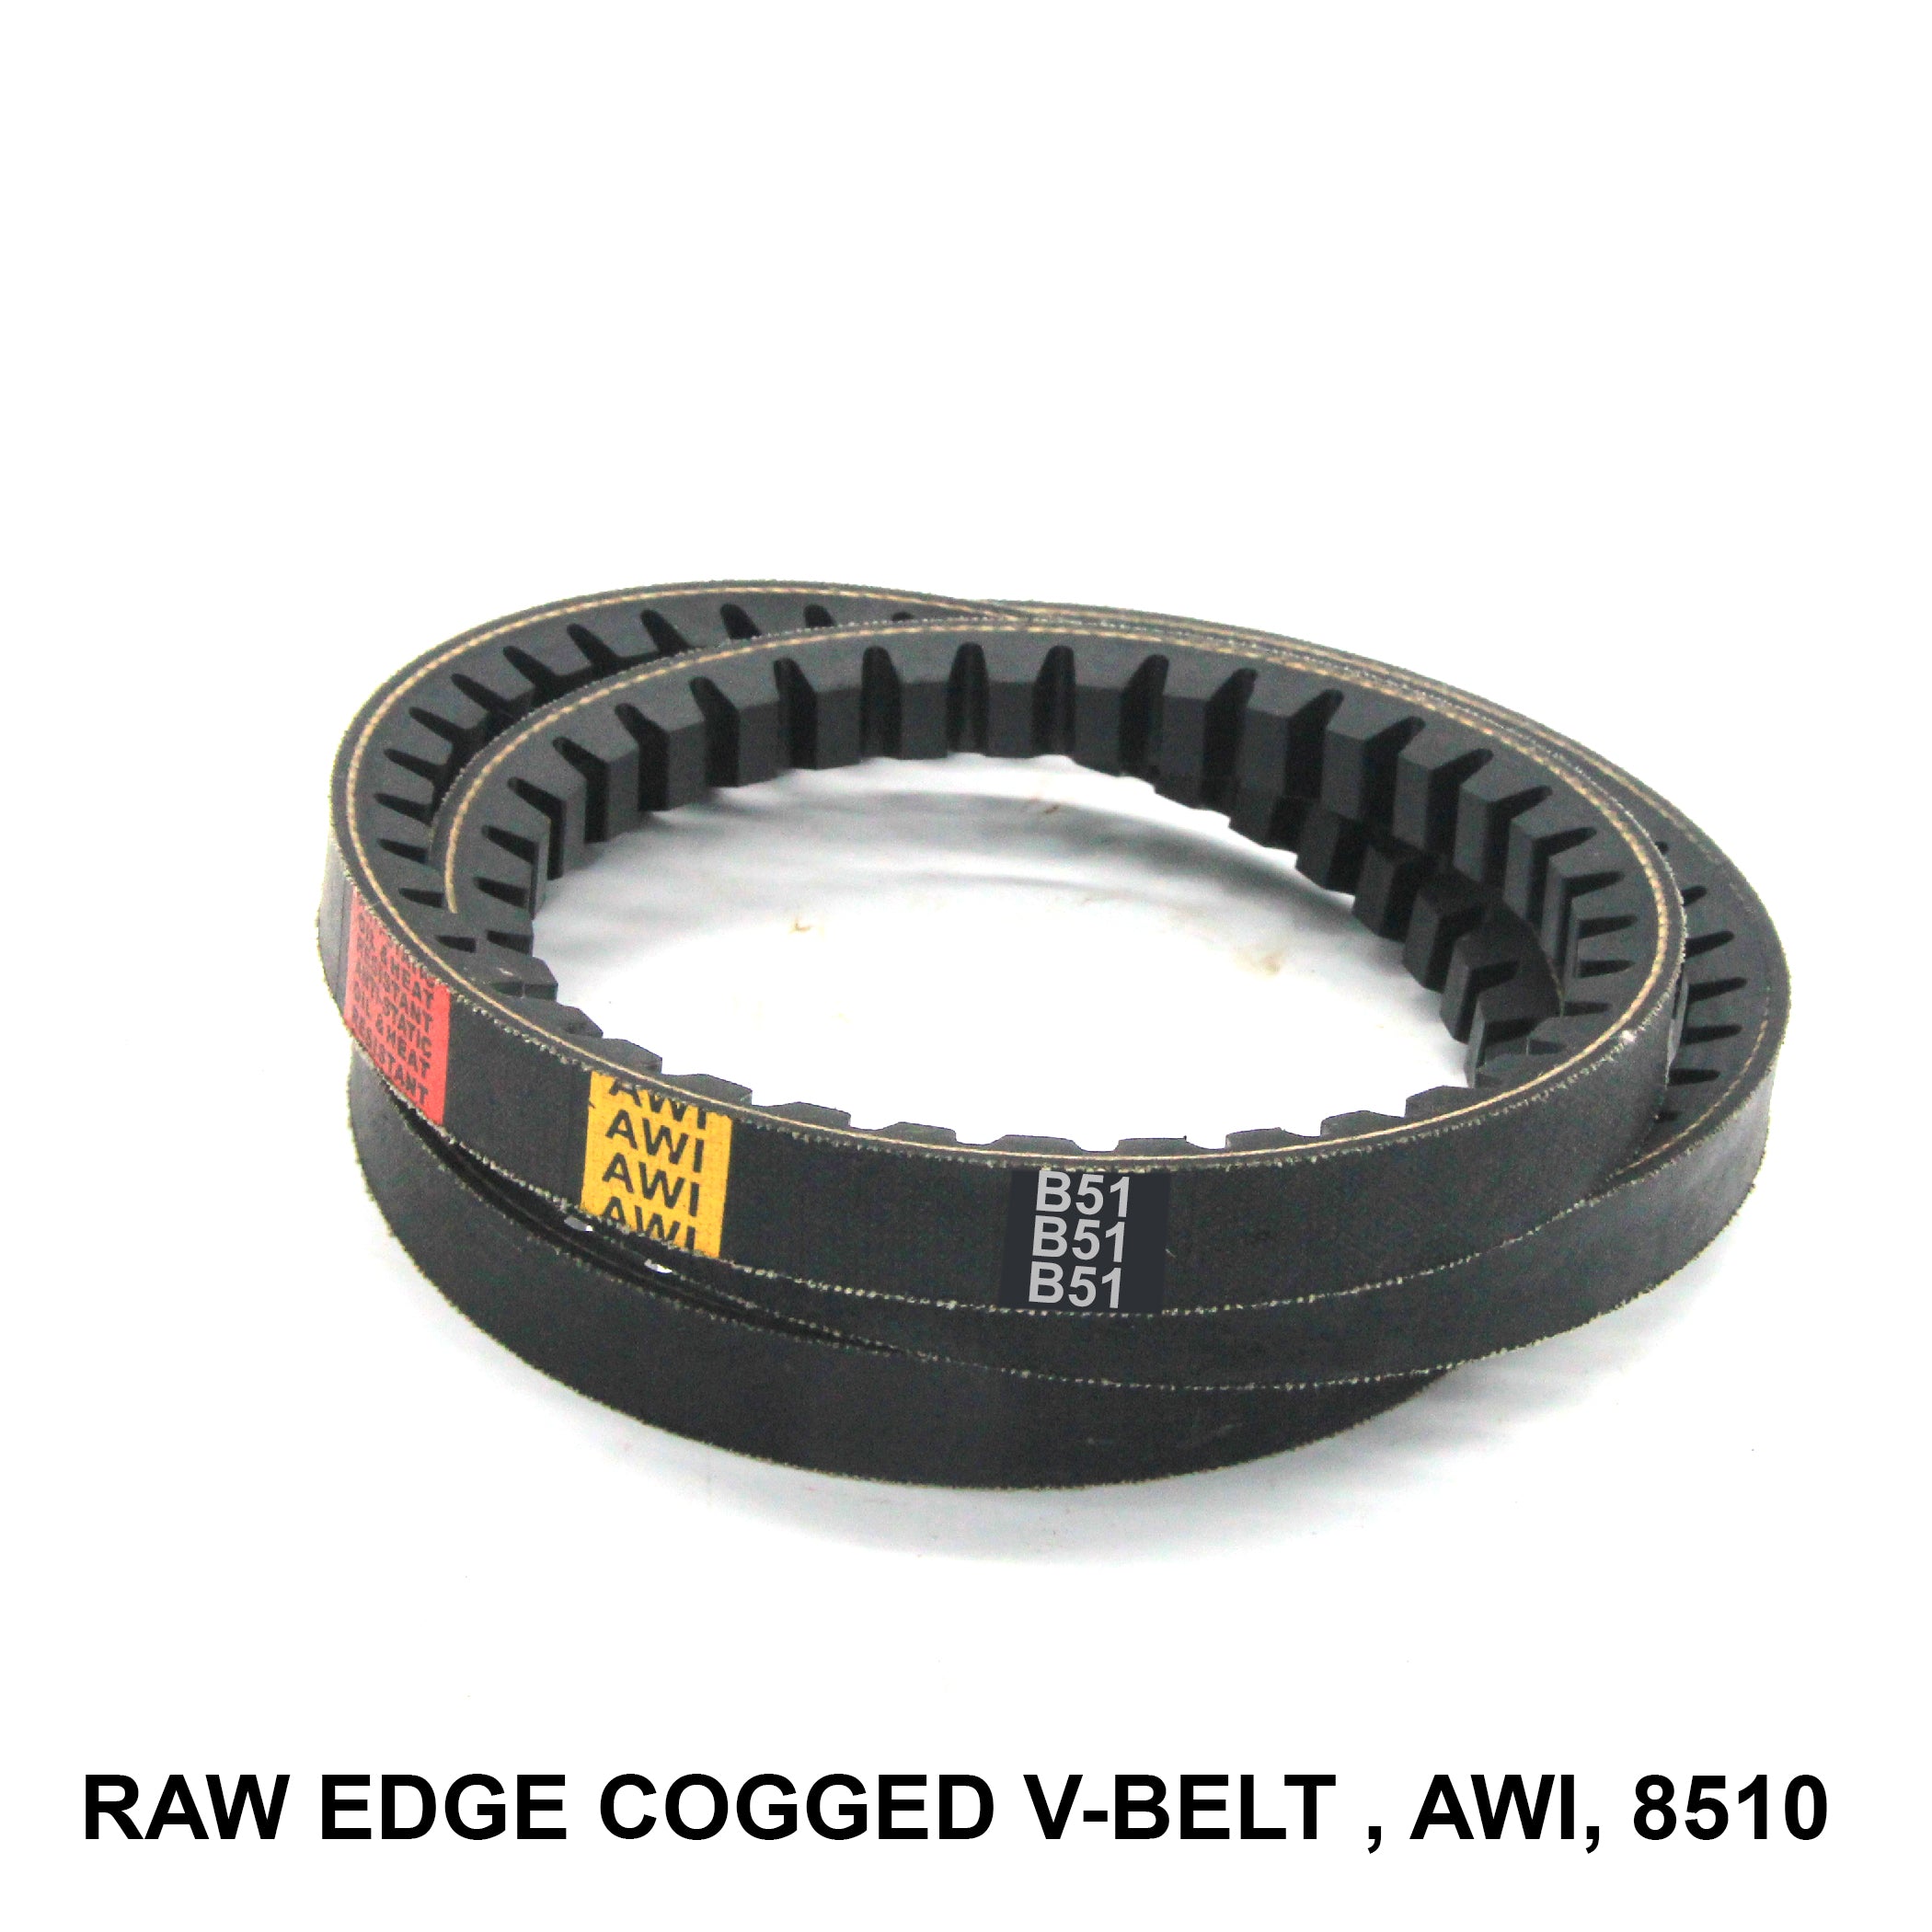 Raw Edge Cogged V-Belt with AWI, RECMF-8510